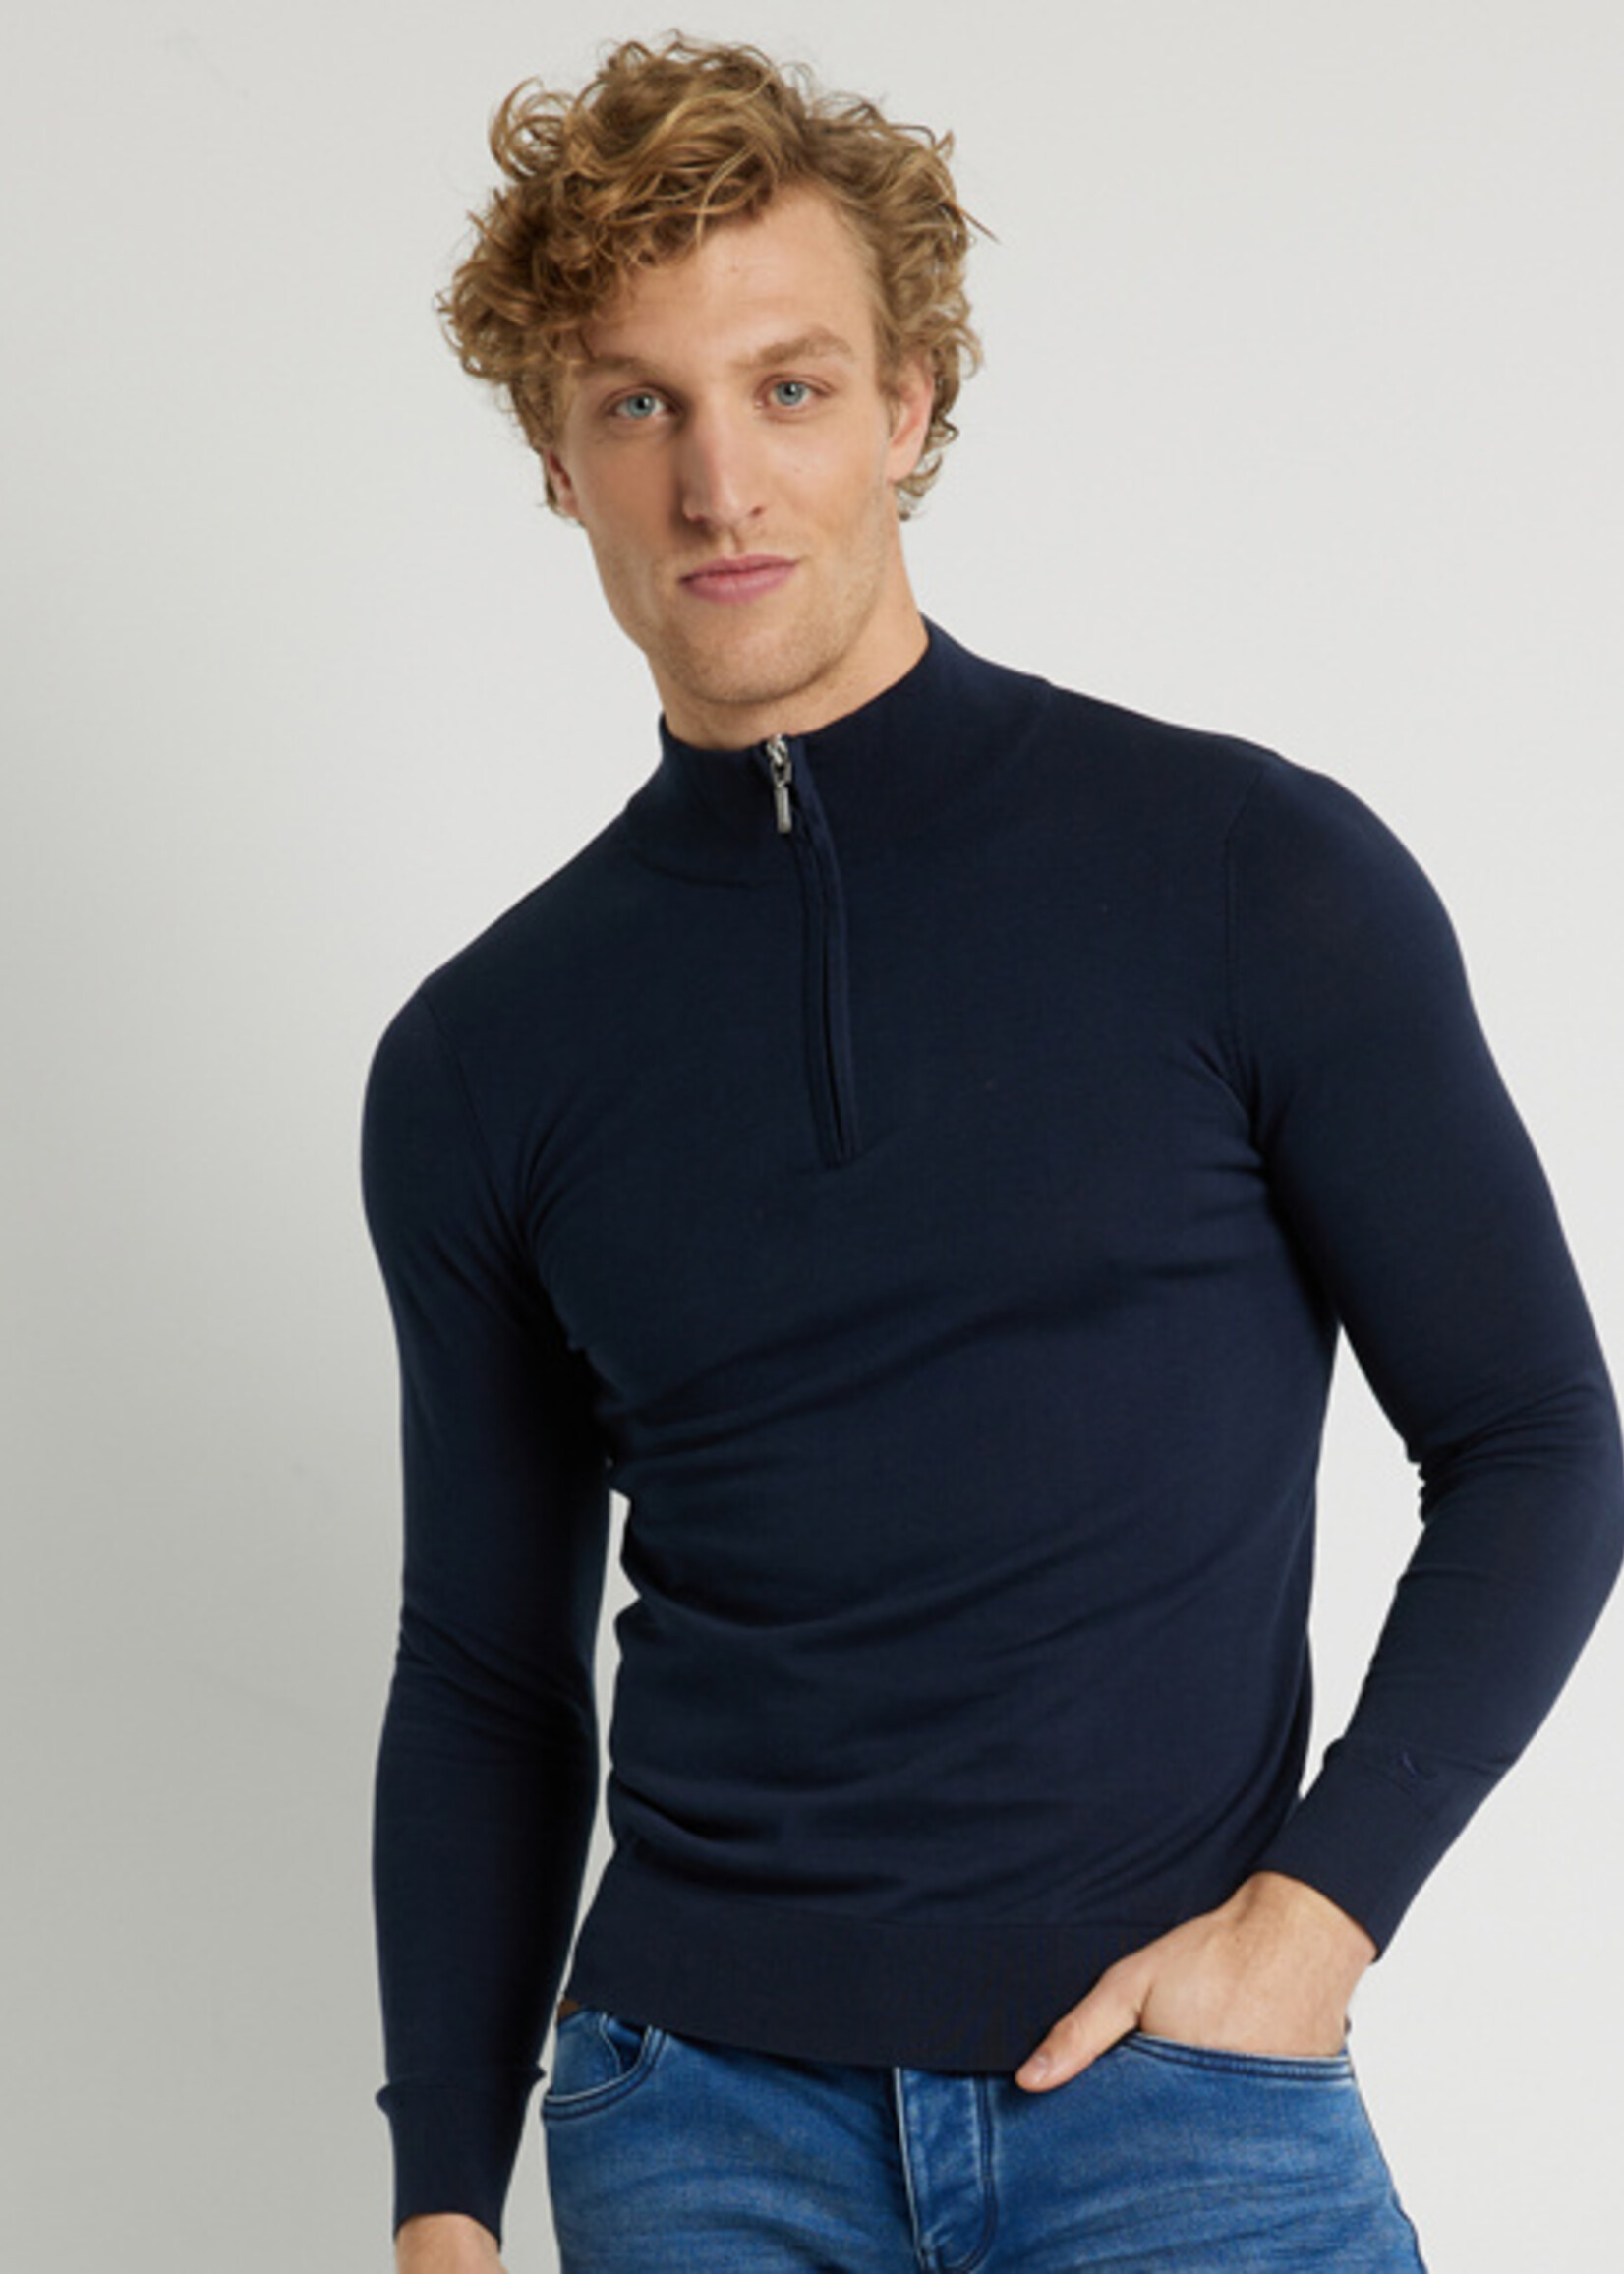 Comodo Shirts Navy blue half-way zip sweater